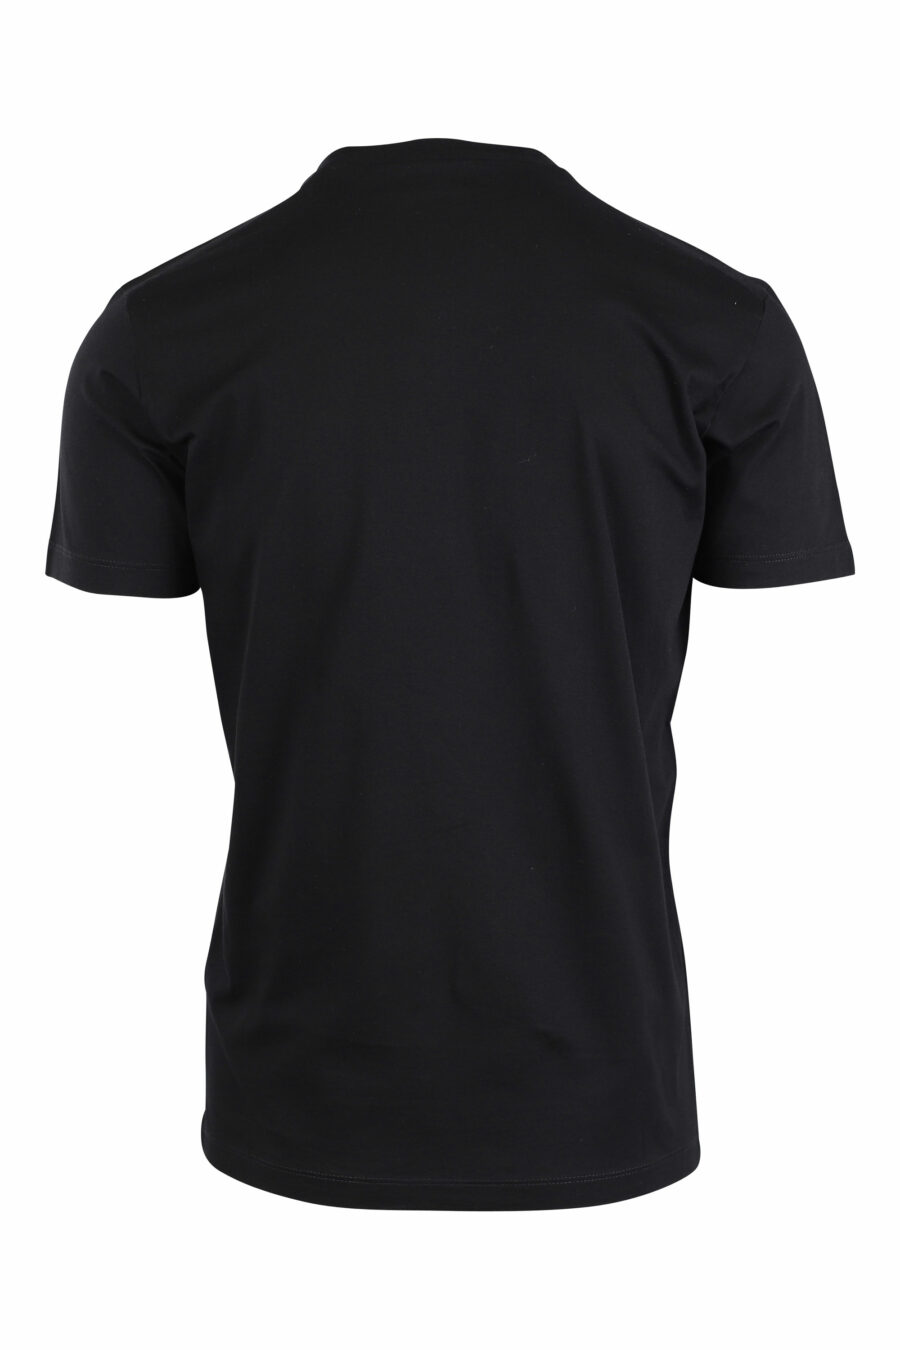 Camiseta negra con maxilogo y hoja blanca - IMG 2648